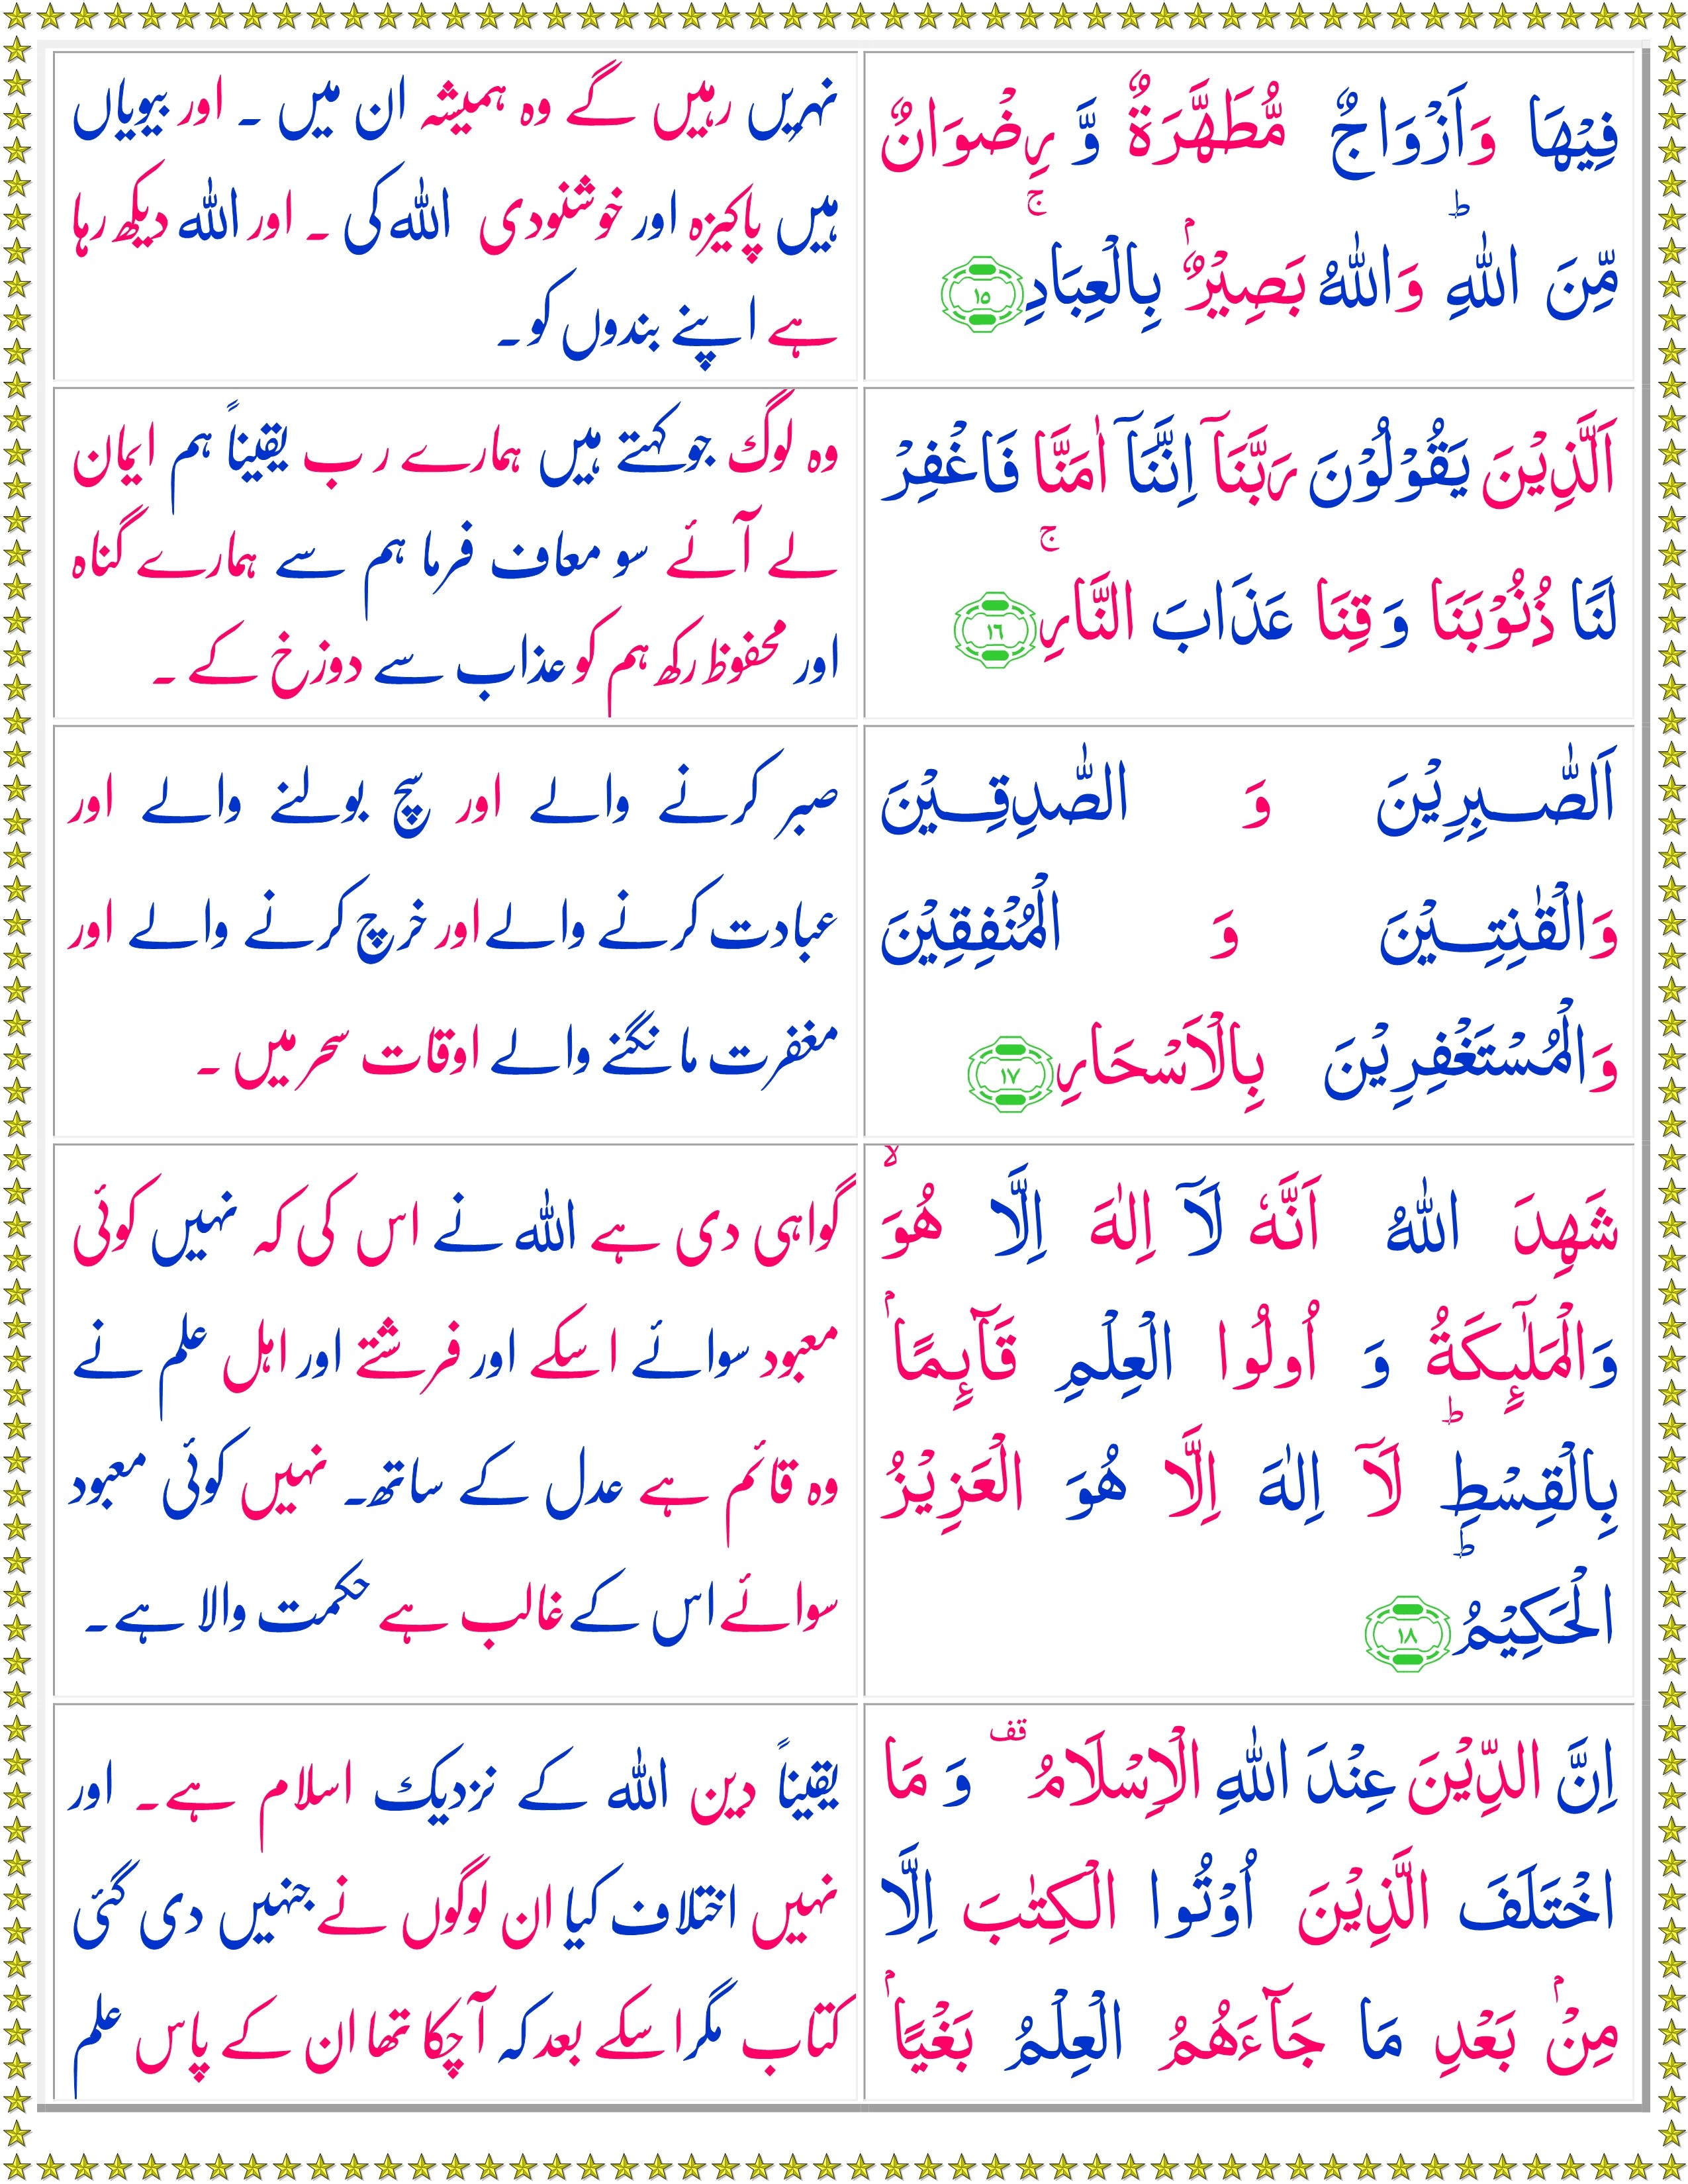 Surah Al Jasia Urdu Quran O Sunnat